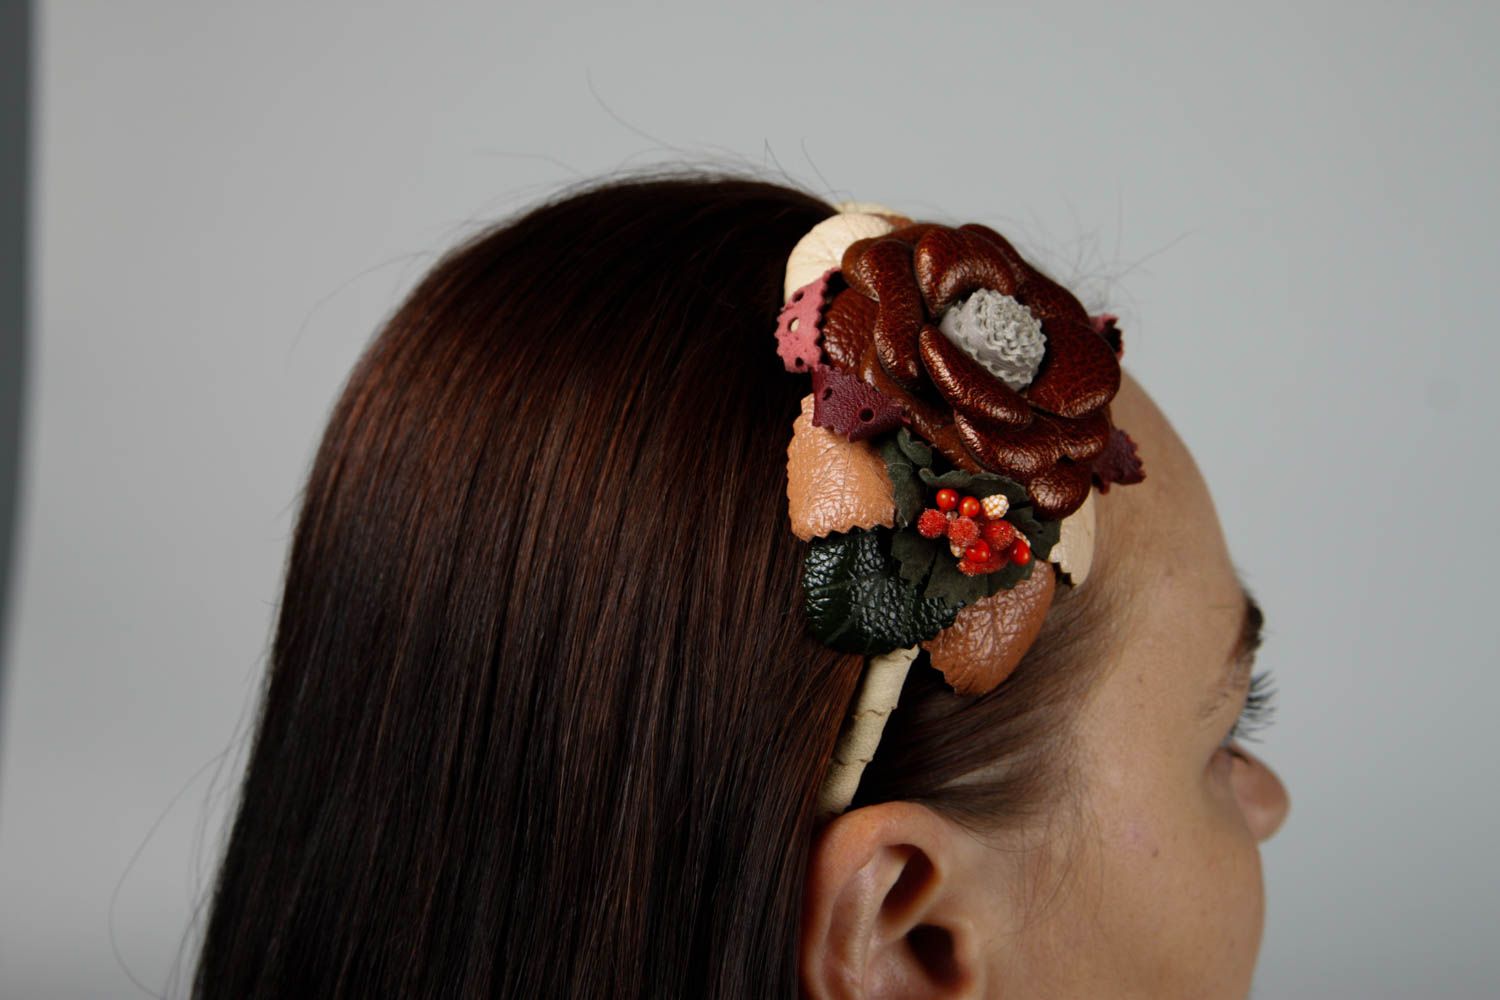 Unusual handmade headband head accessories for girls trendy hair ideas photo 2